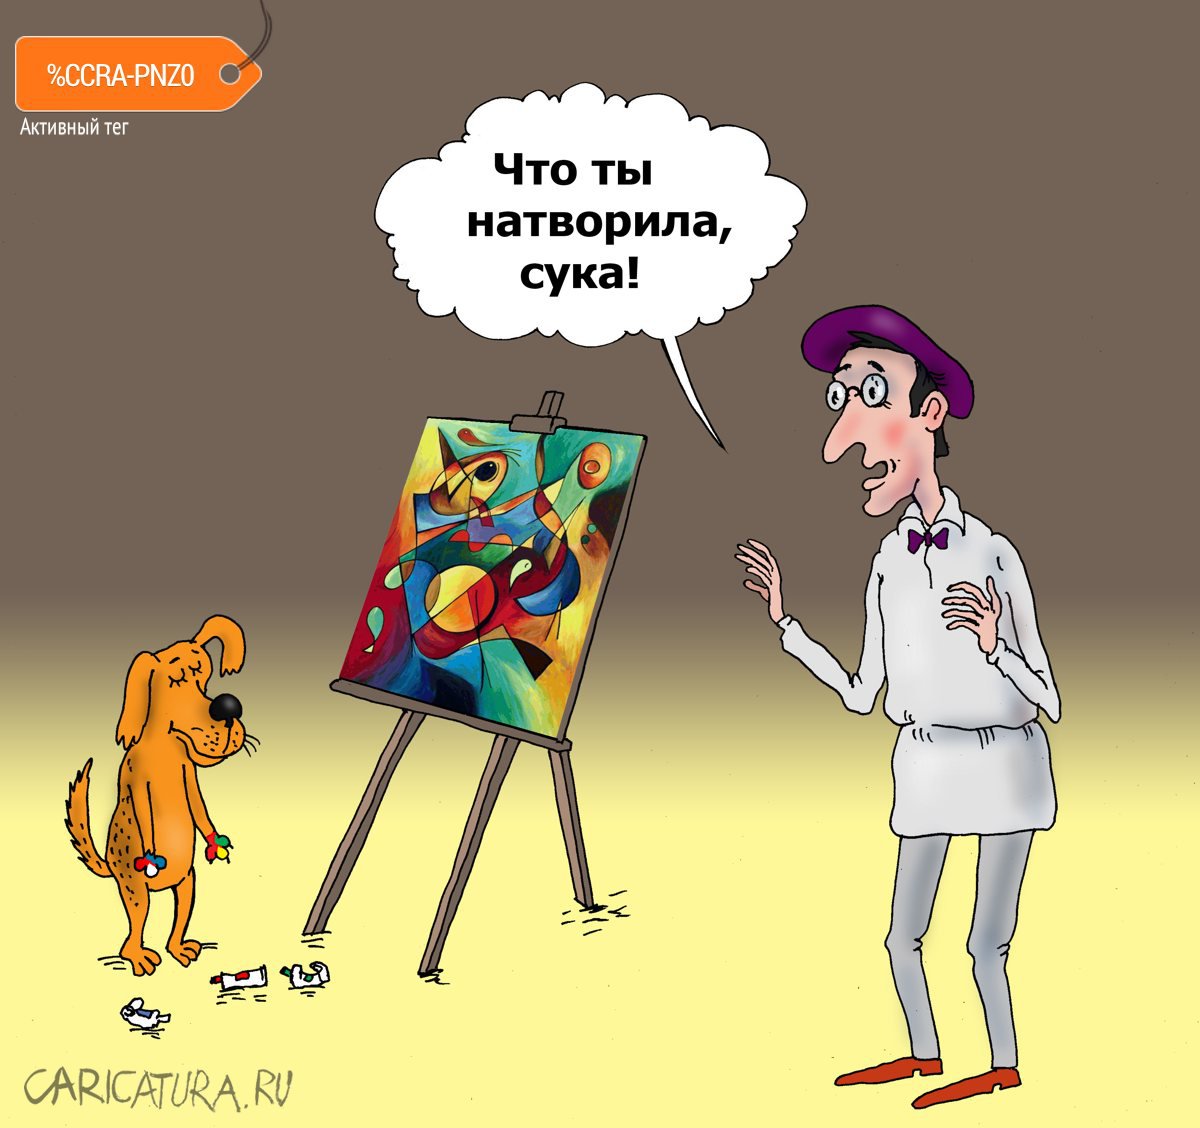 Карикатура "Собака Кандинского", Валерий Тарасенко